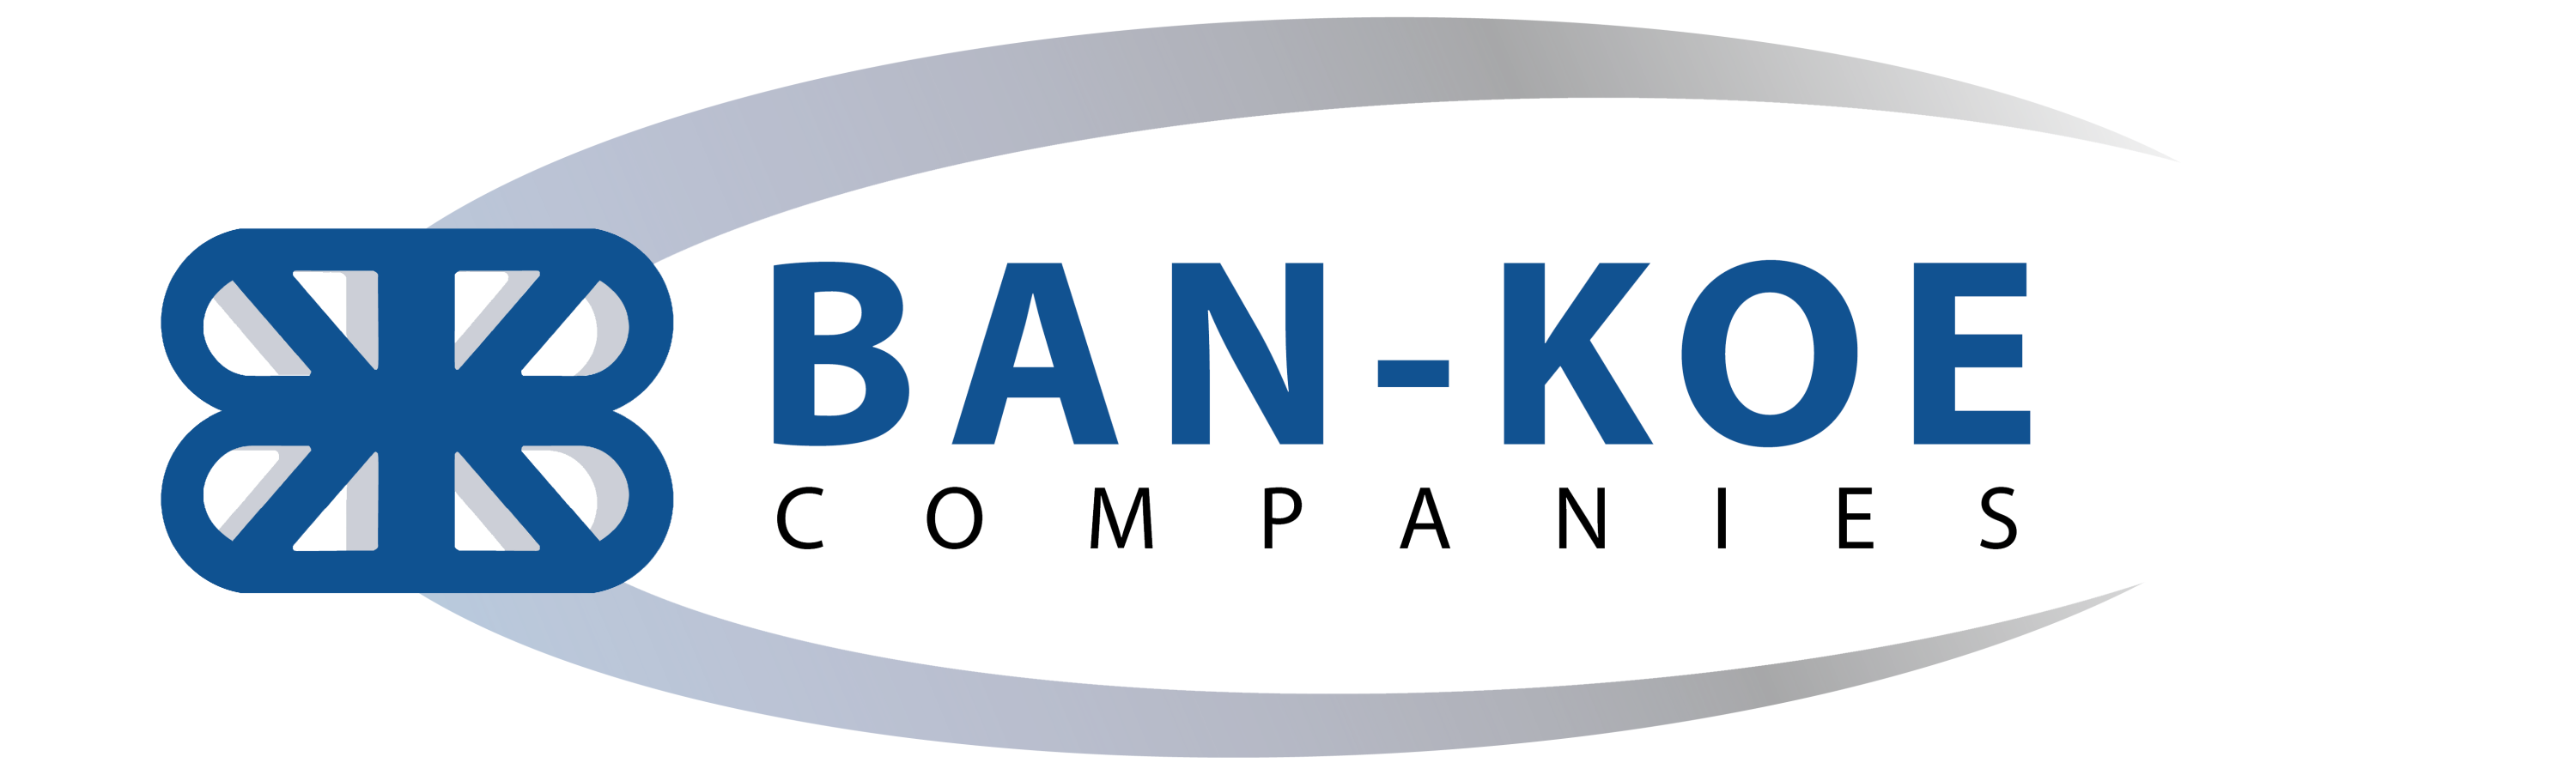 Ban-Koe Companies